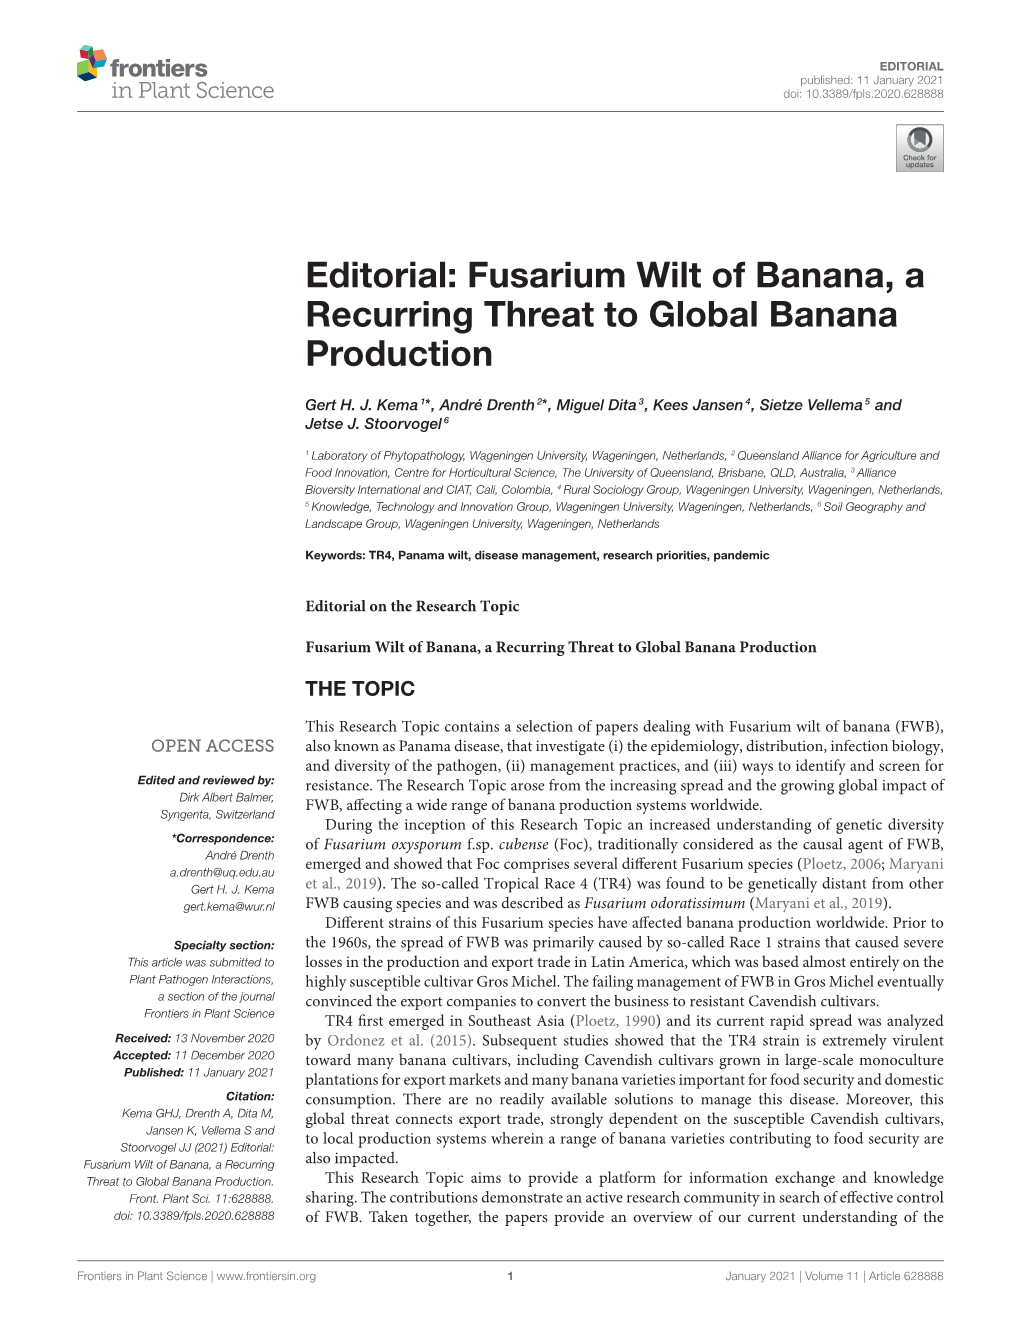 Fusarium Wilt of Banana, a Recurring Threat to Global Banana Production